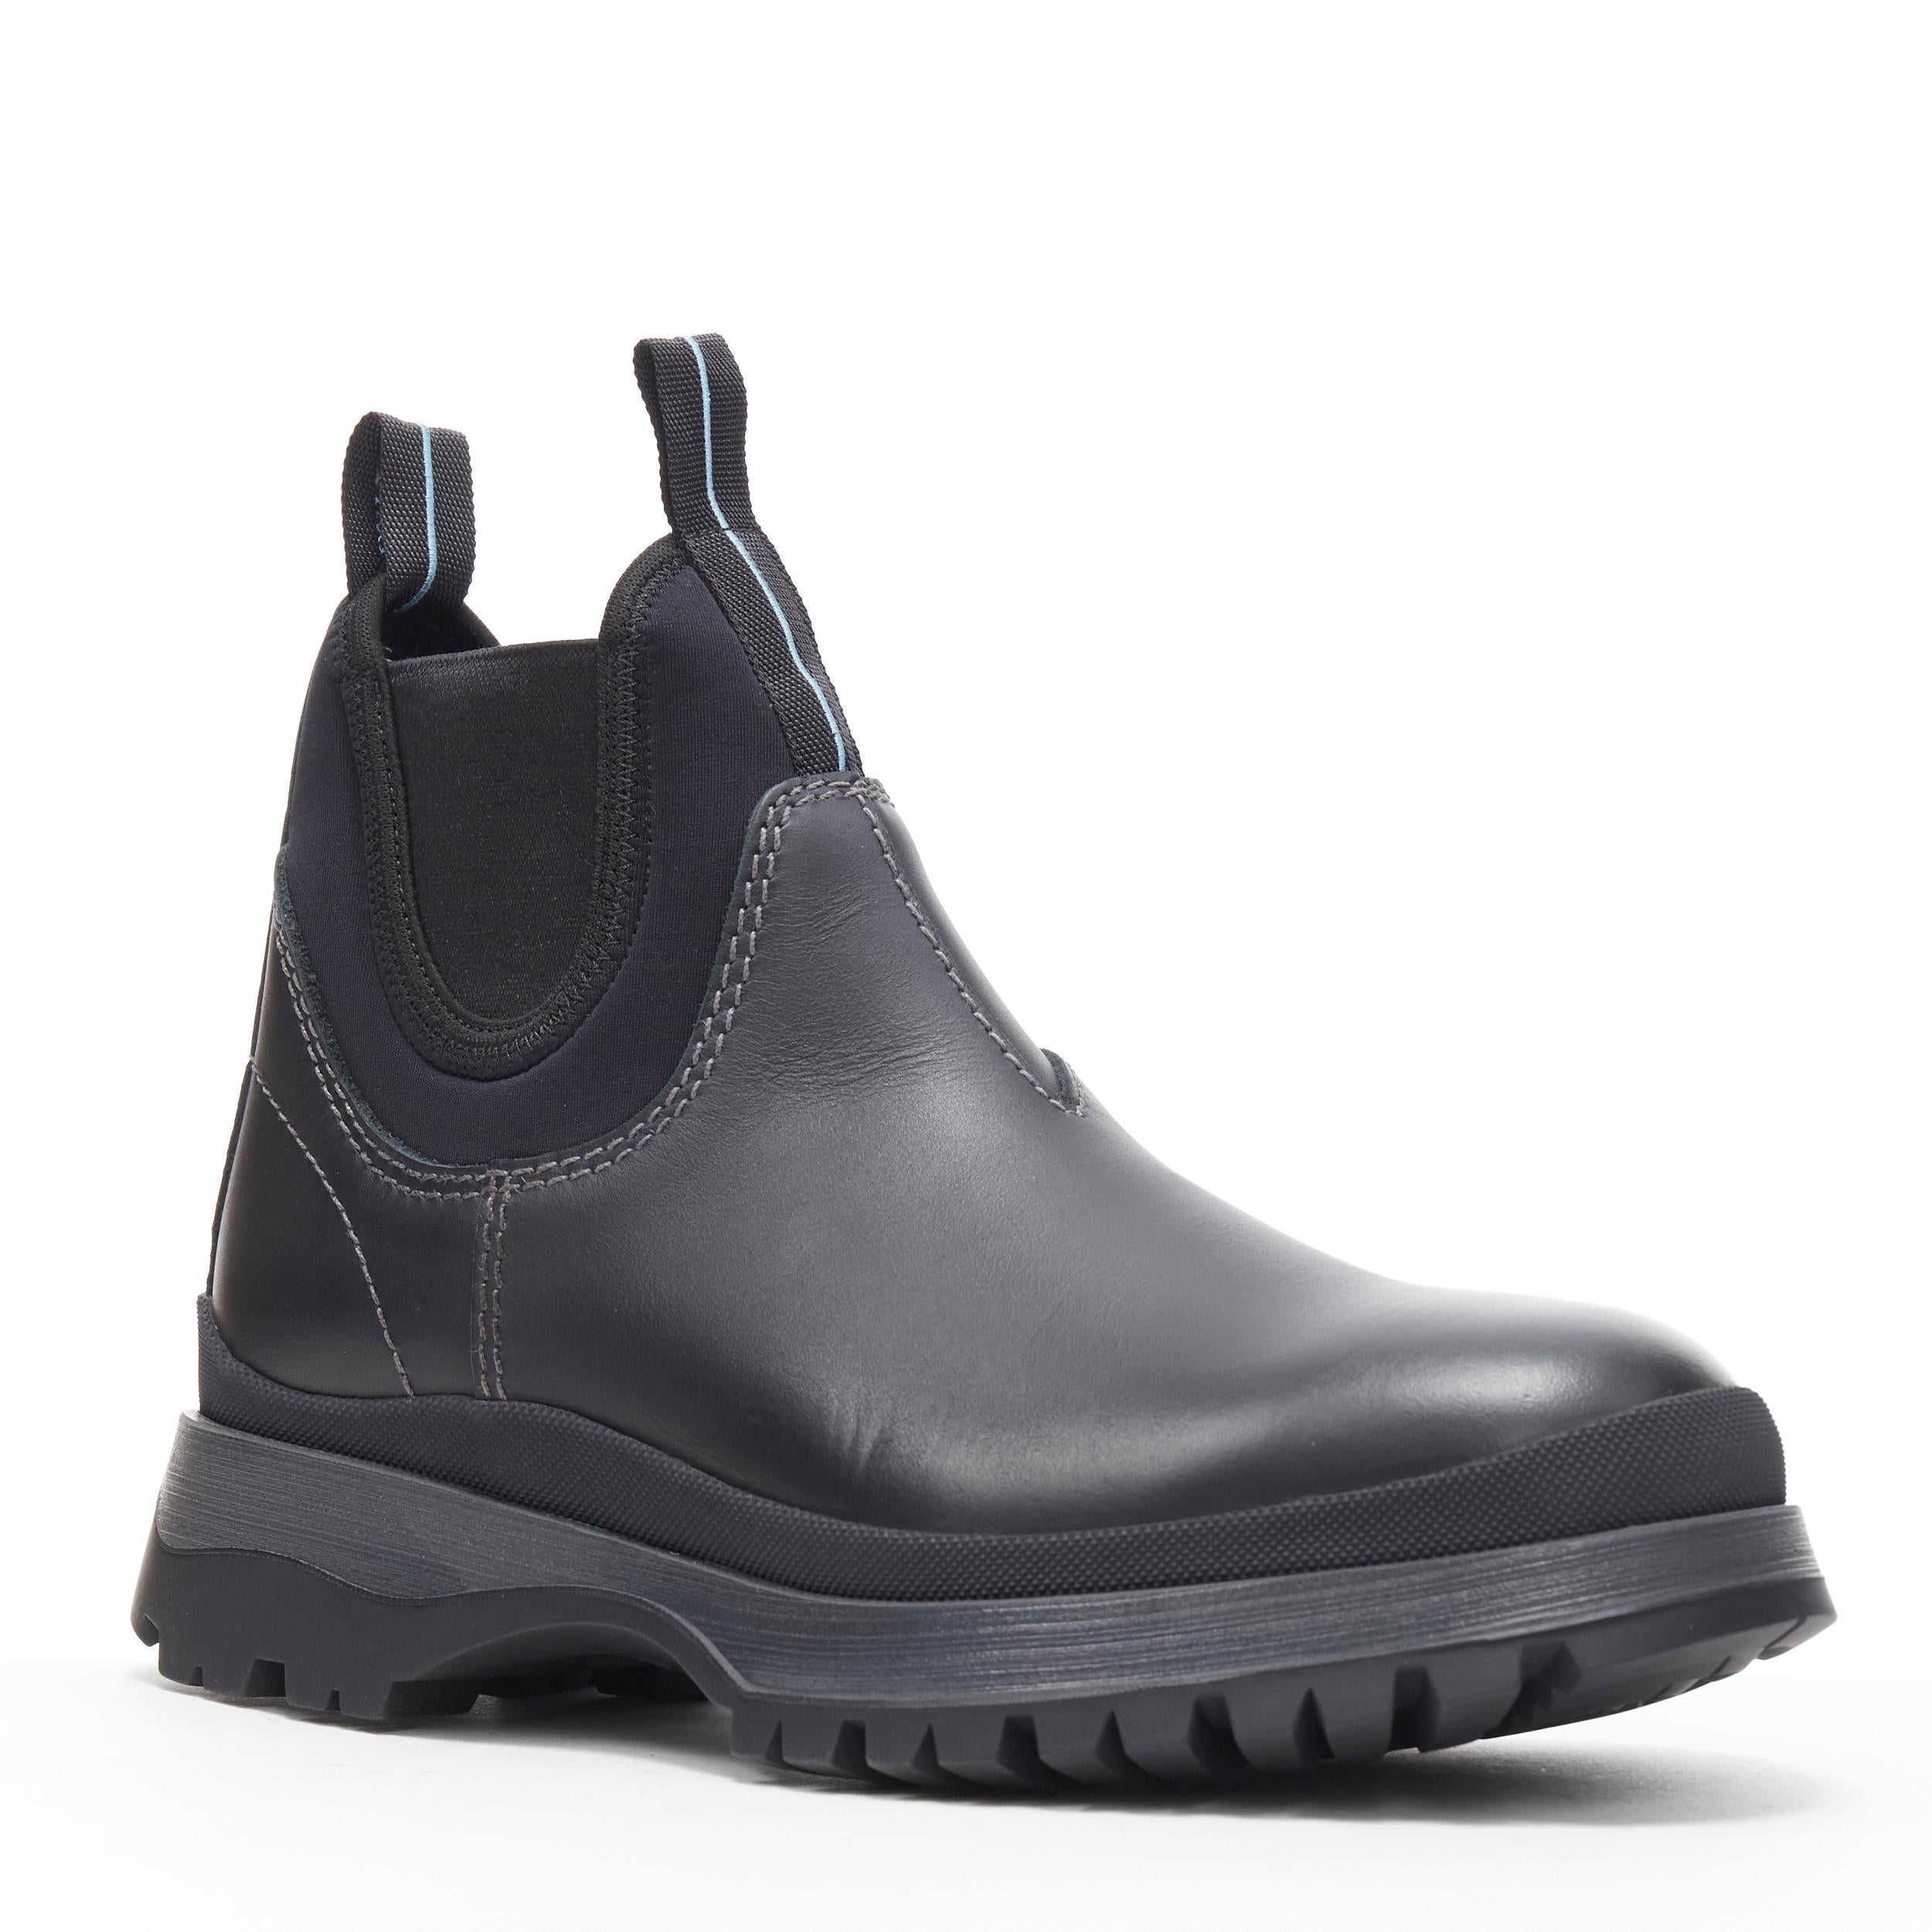 new PRADA Runway Brixxen black calf chunky triple sole ankle boots UK7.5 EU41.5
Brand: Prada
Designer: Miuccia Prada
Collection: Fall Winter 2018
Model Name / Style: Prada Brixxen
Material: Leather, neoprene
Color: Black
Pattern: Solid
Extra Detail: